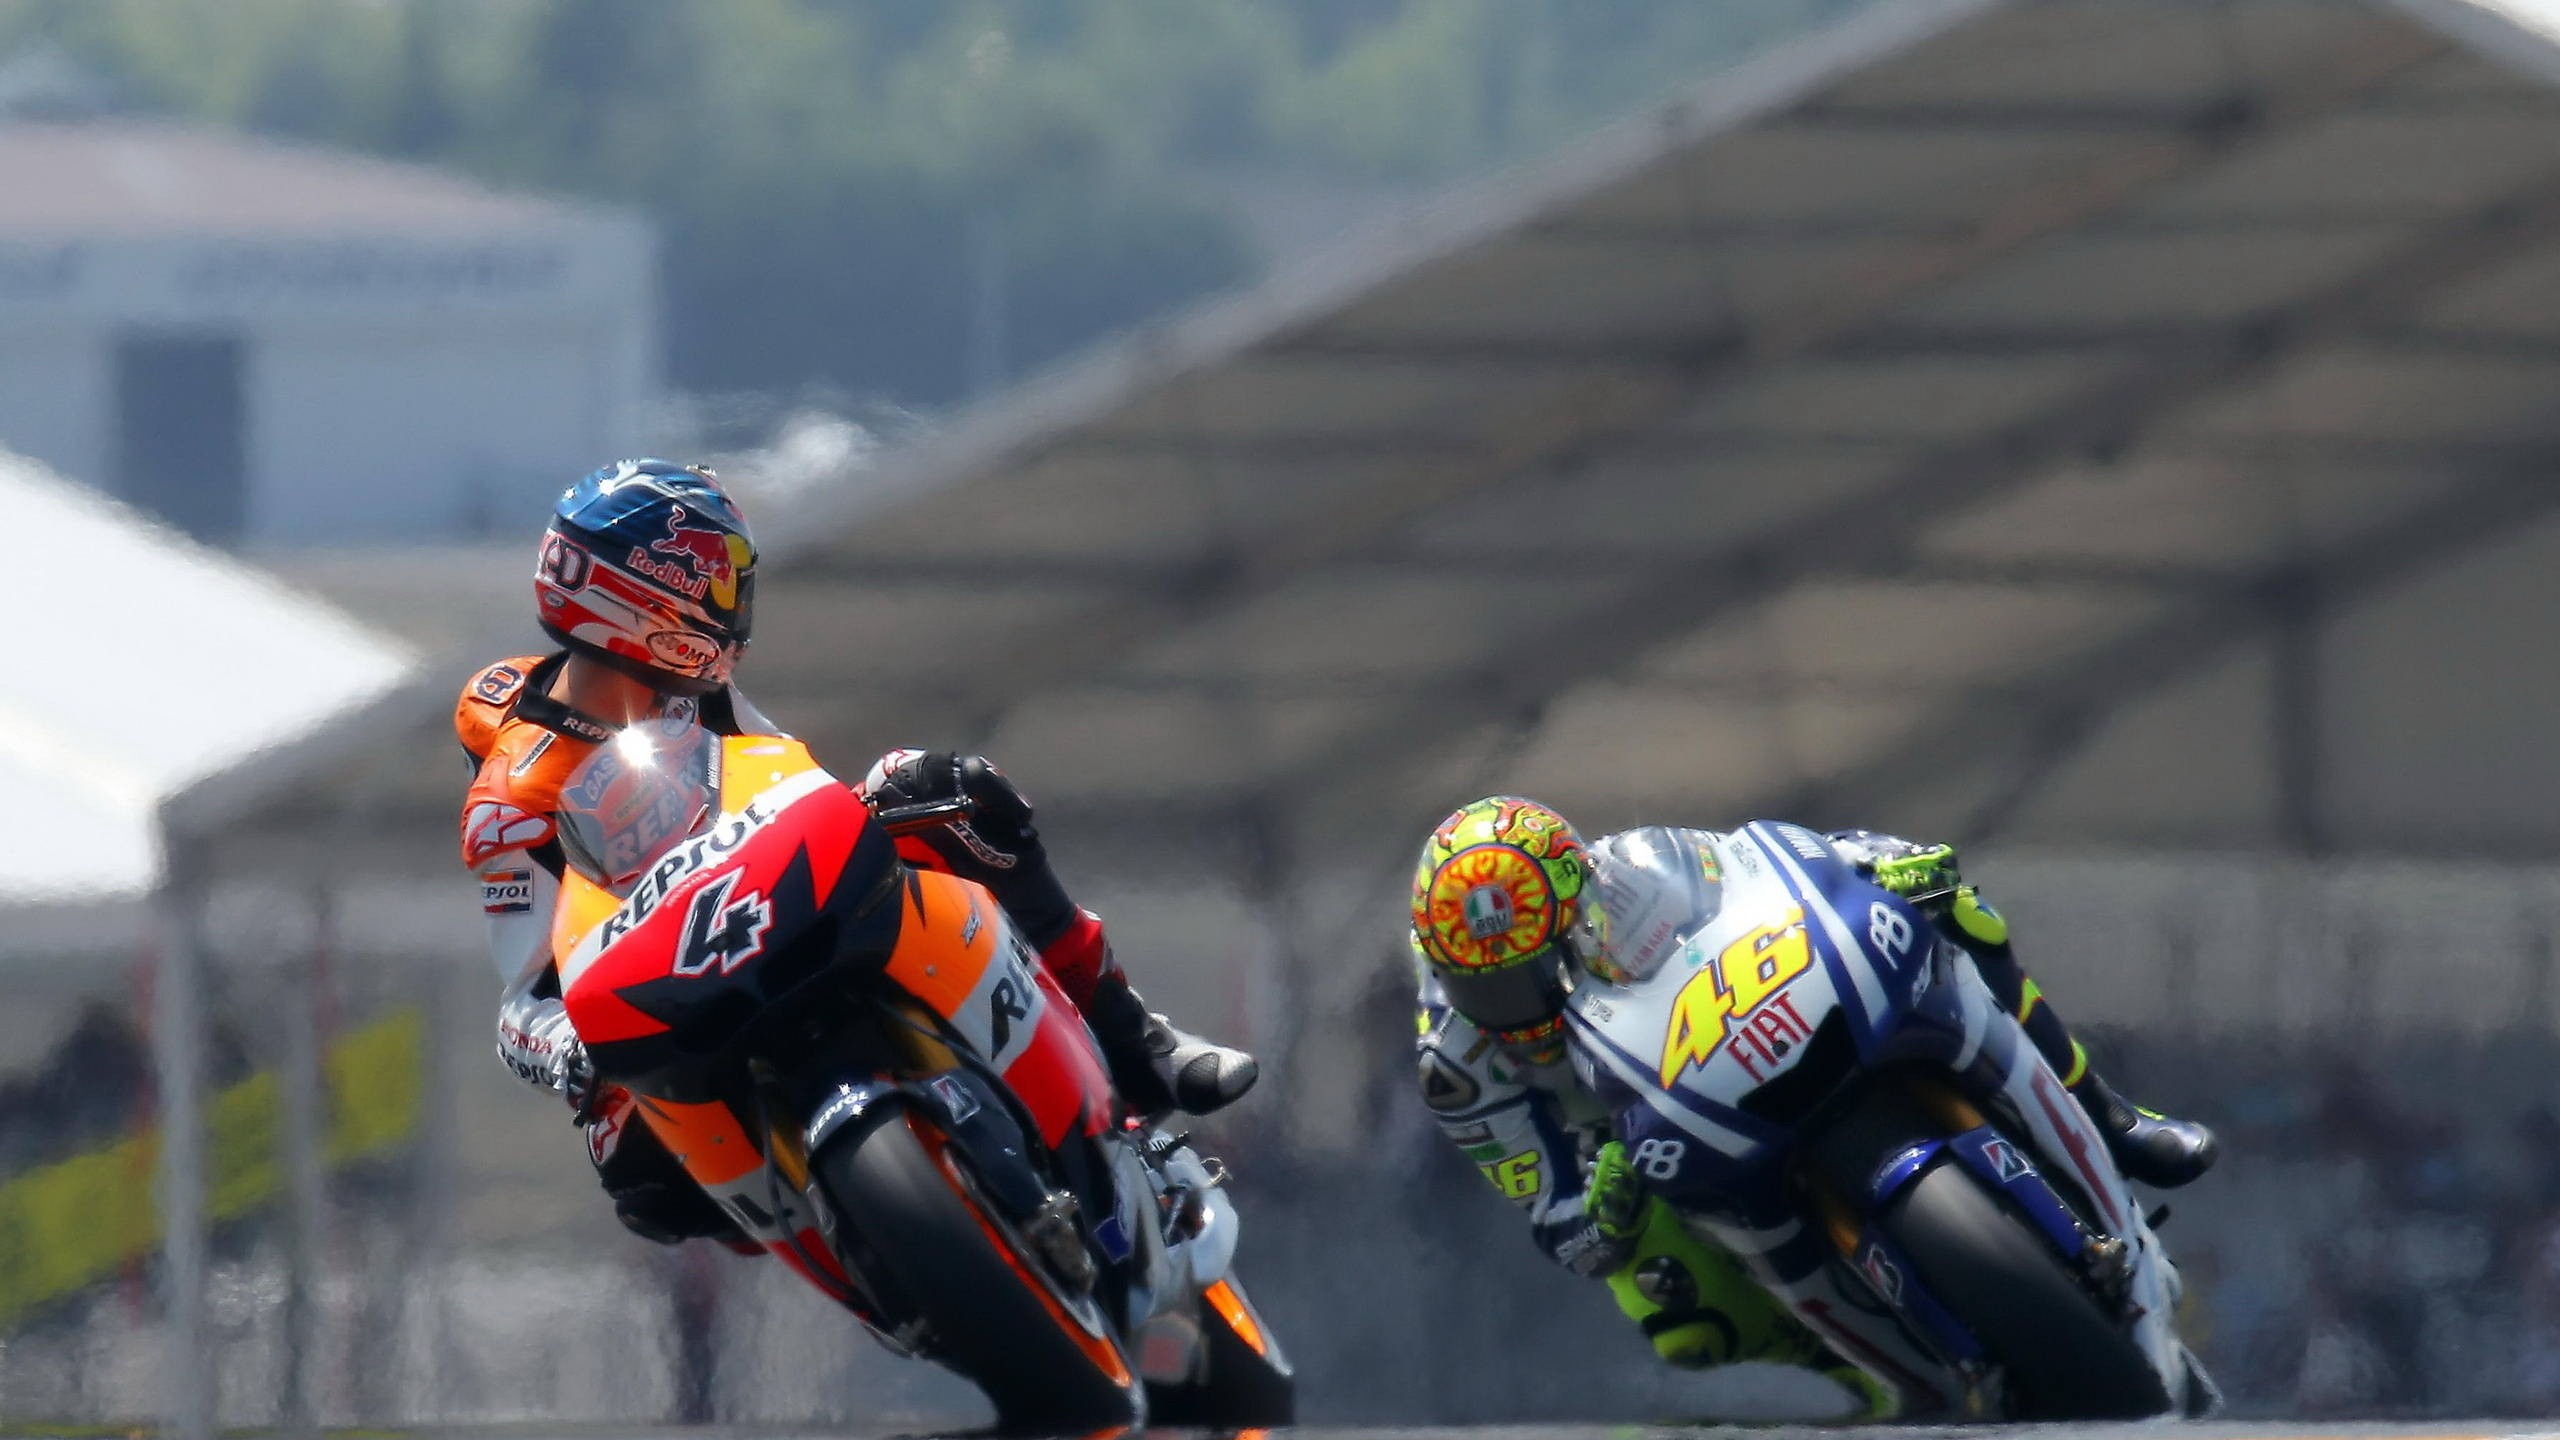 MotoGP Riders for 2560x1440 HDTV resolution